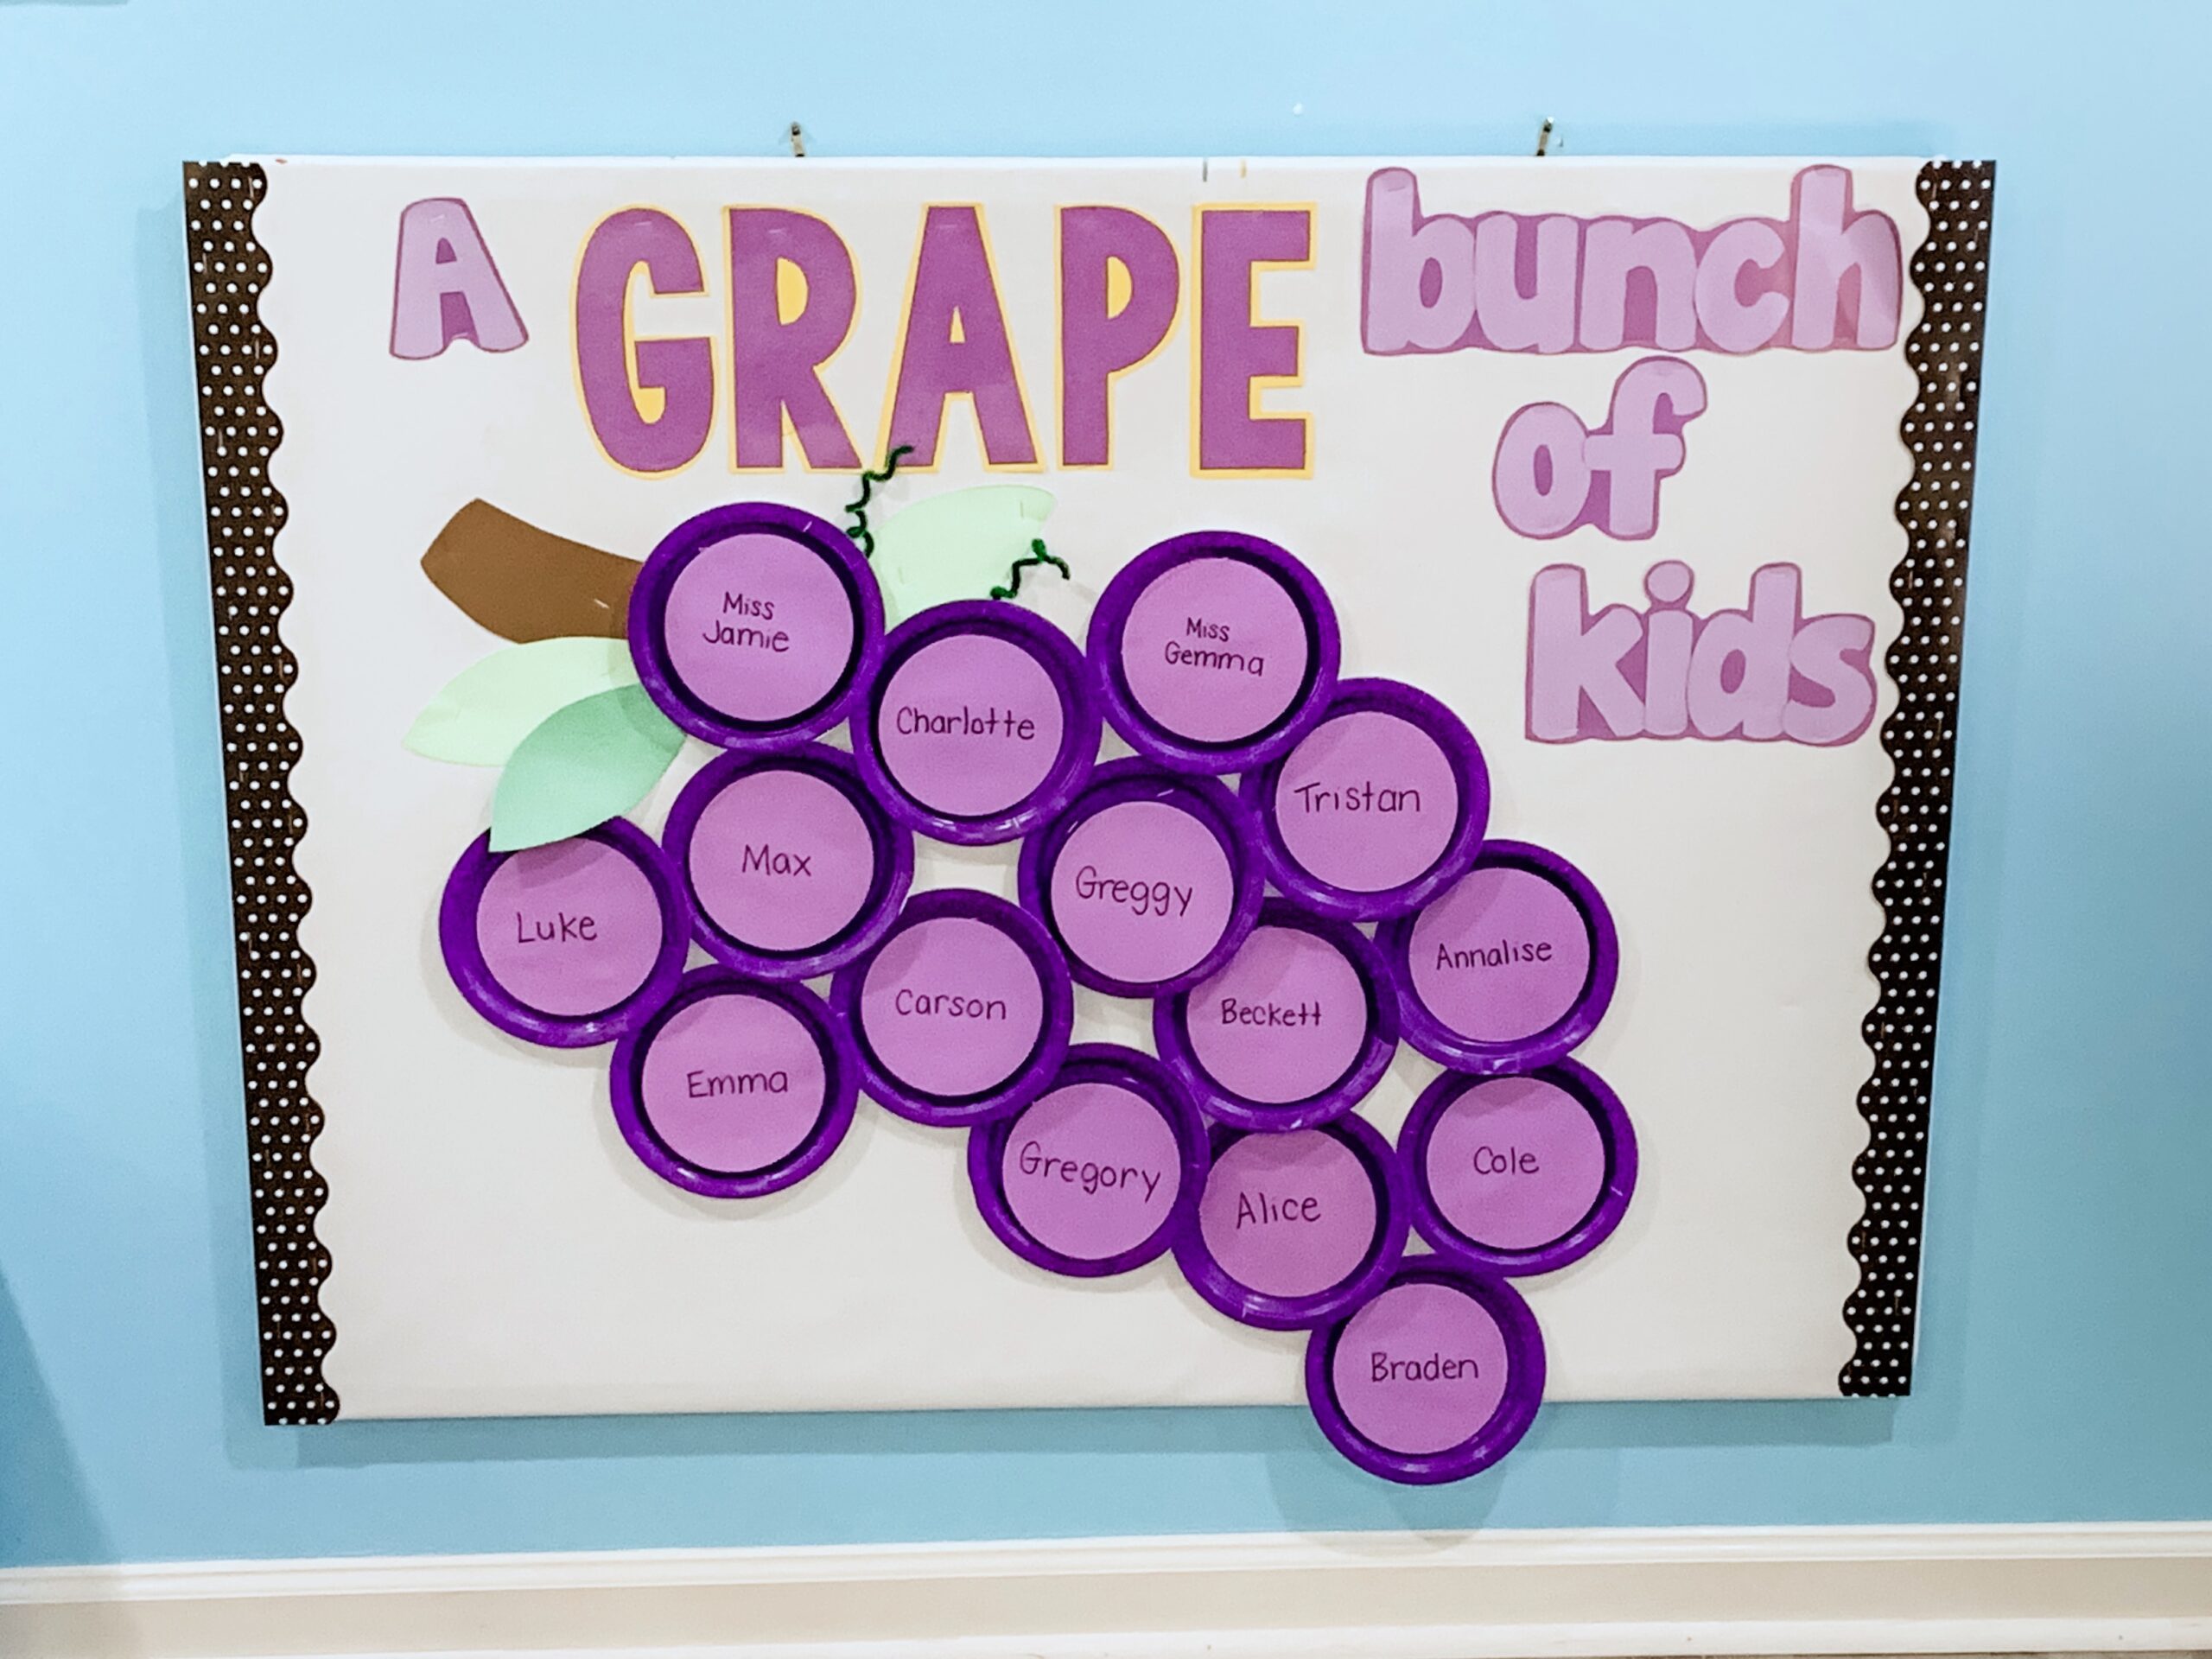 Grape bunch of kids bulletin board